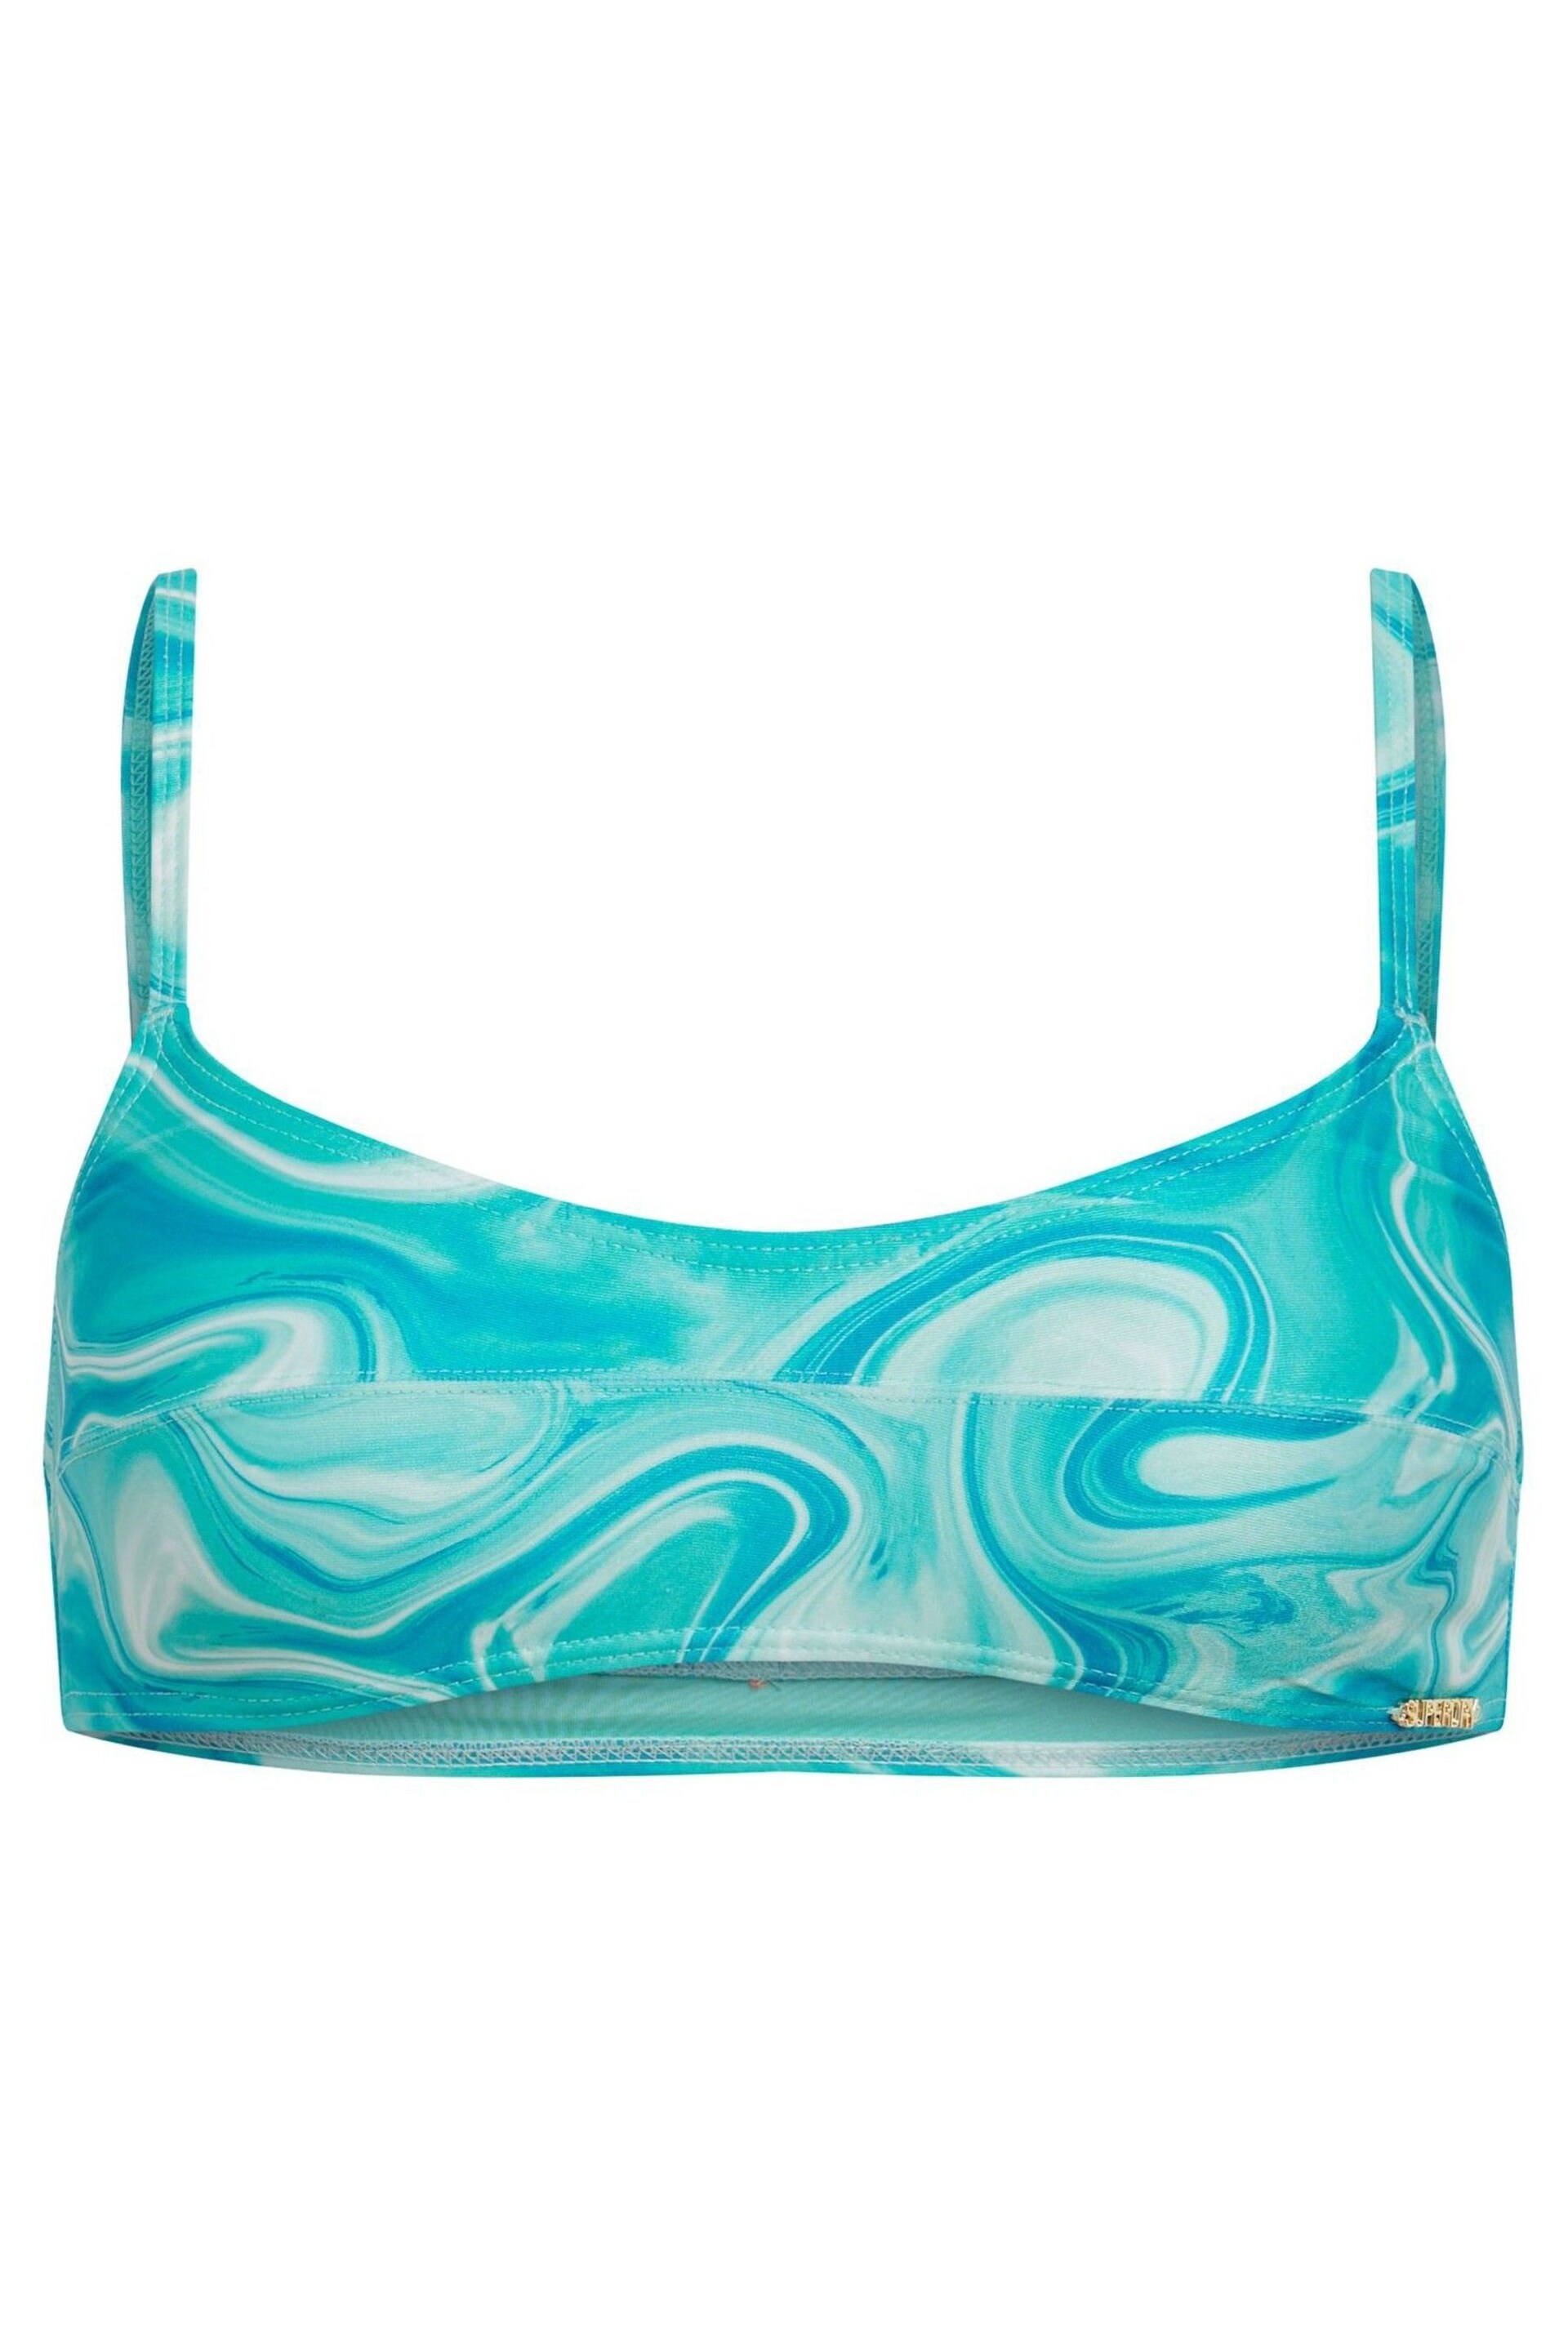 Superdry Blue Print Bralette Bikini Top - Image 5 of 5